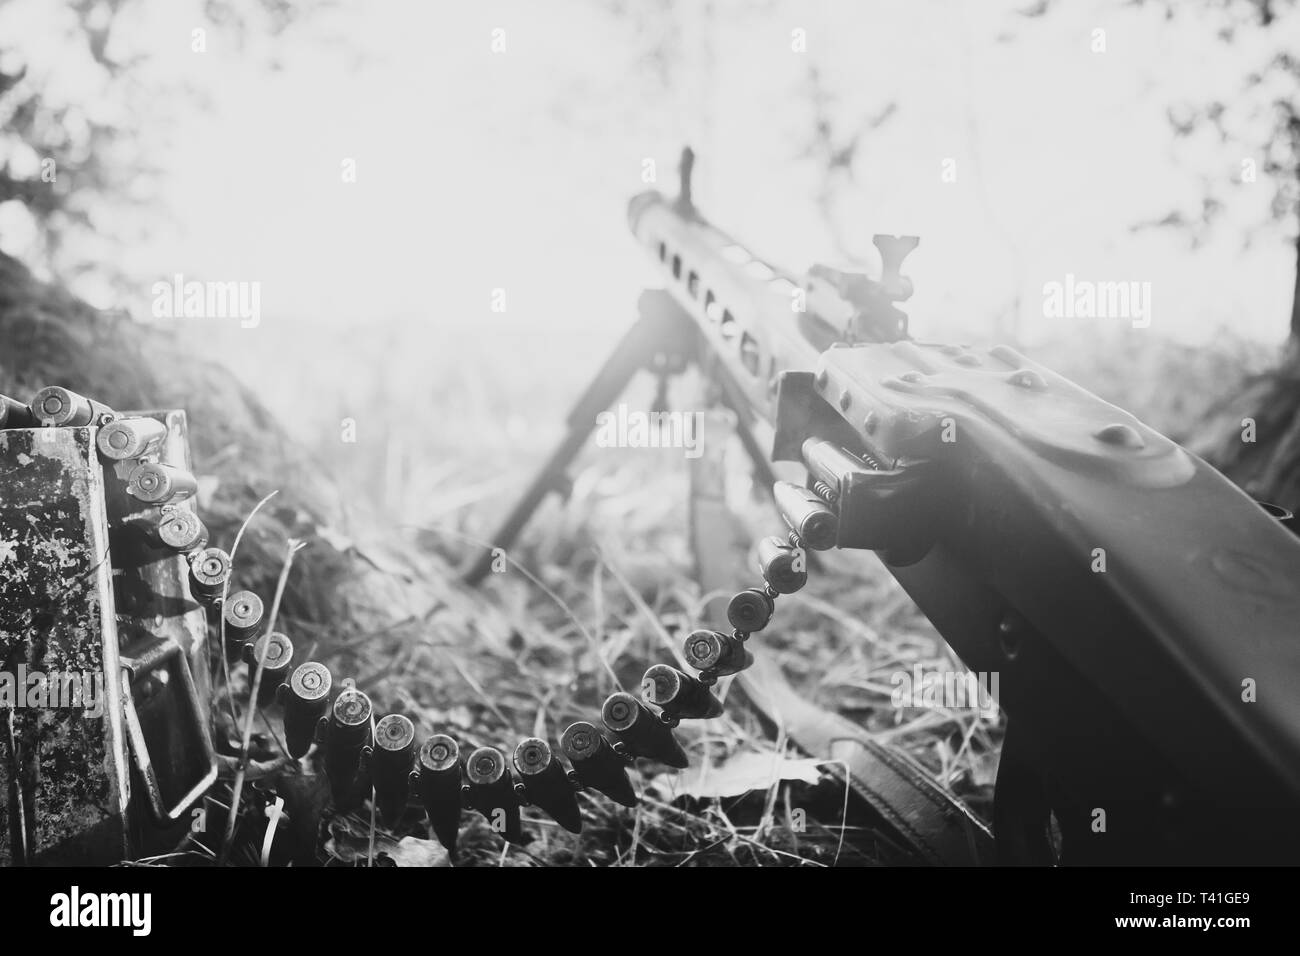 World War II German Wehrmacht Infantry Soldier Army Weapon. MG 42 Machine Gun On Ground In Forest Trench. WWII WW2 German Ammunition. Photo In Black A Stock Photo